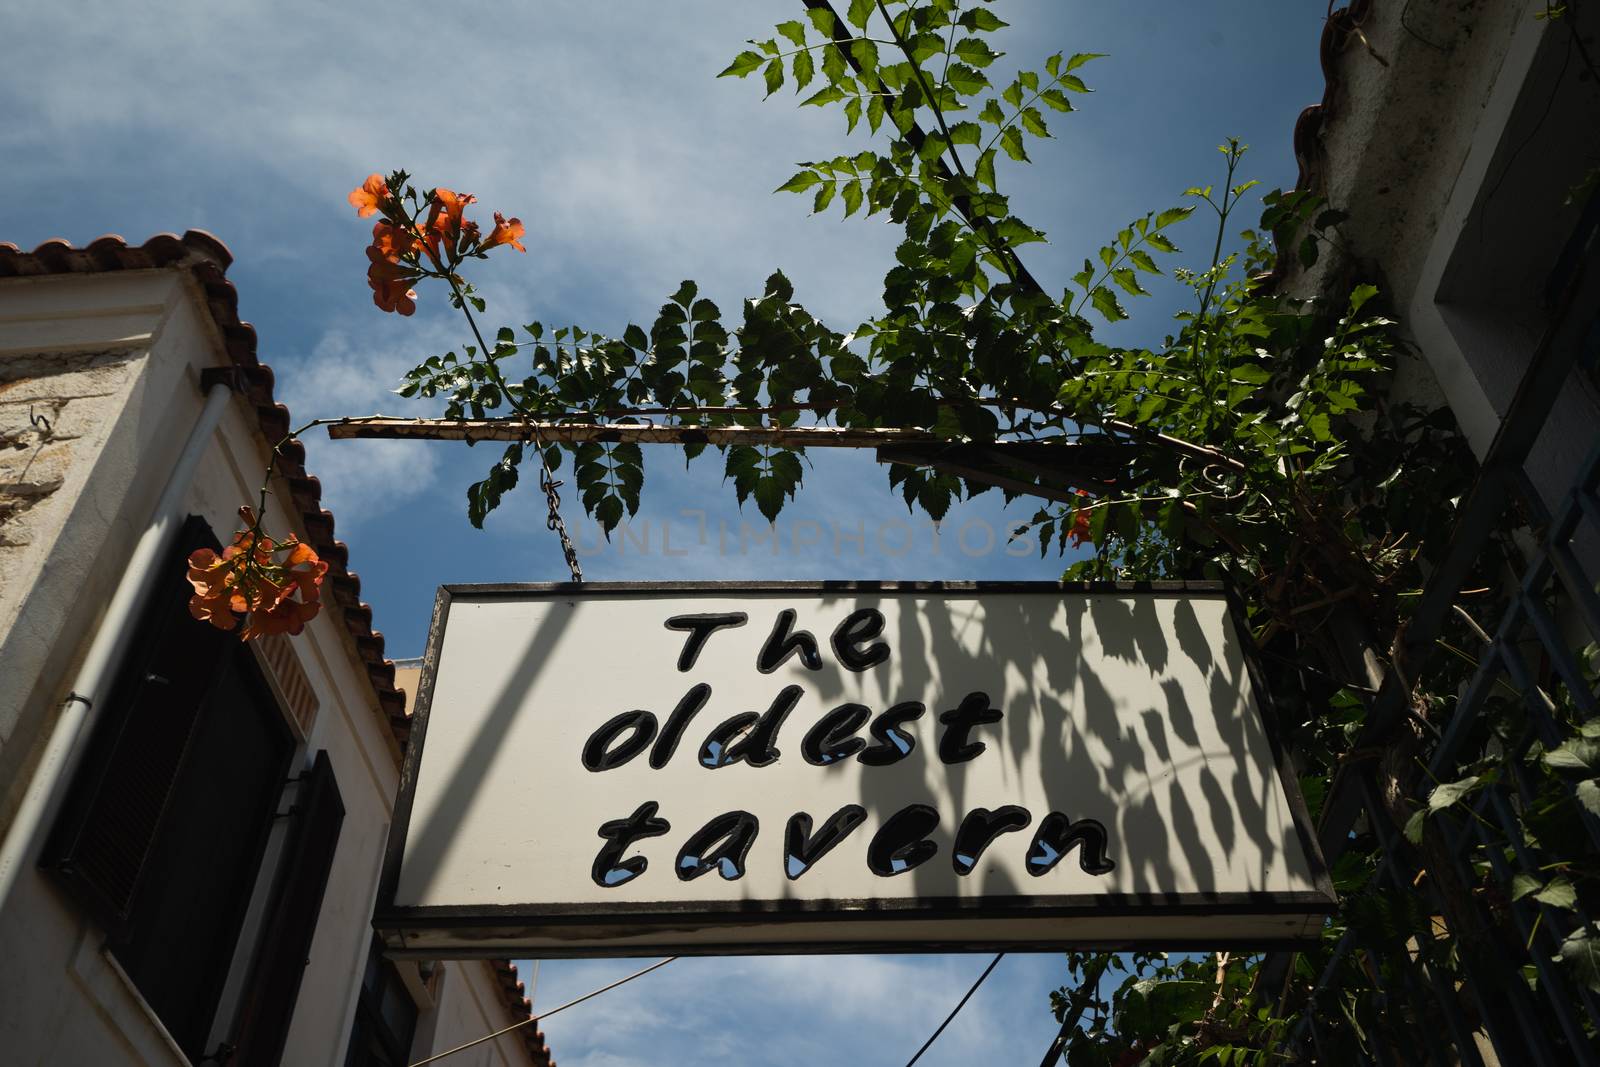 The Oldest Tavern Sign